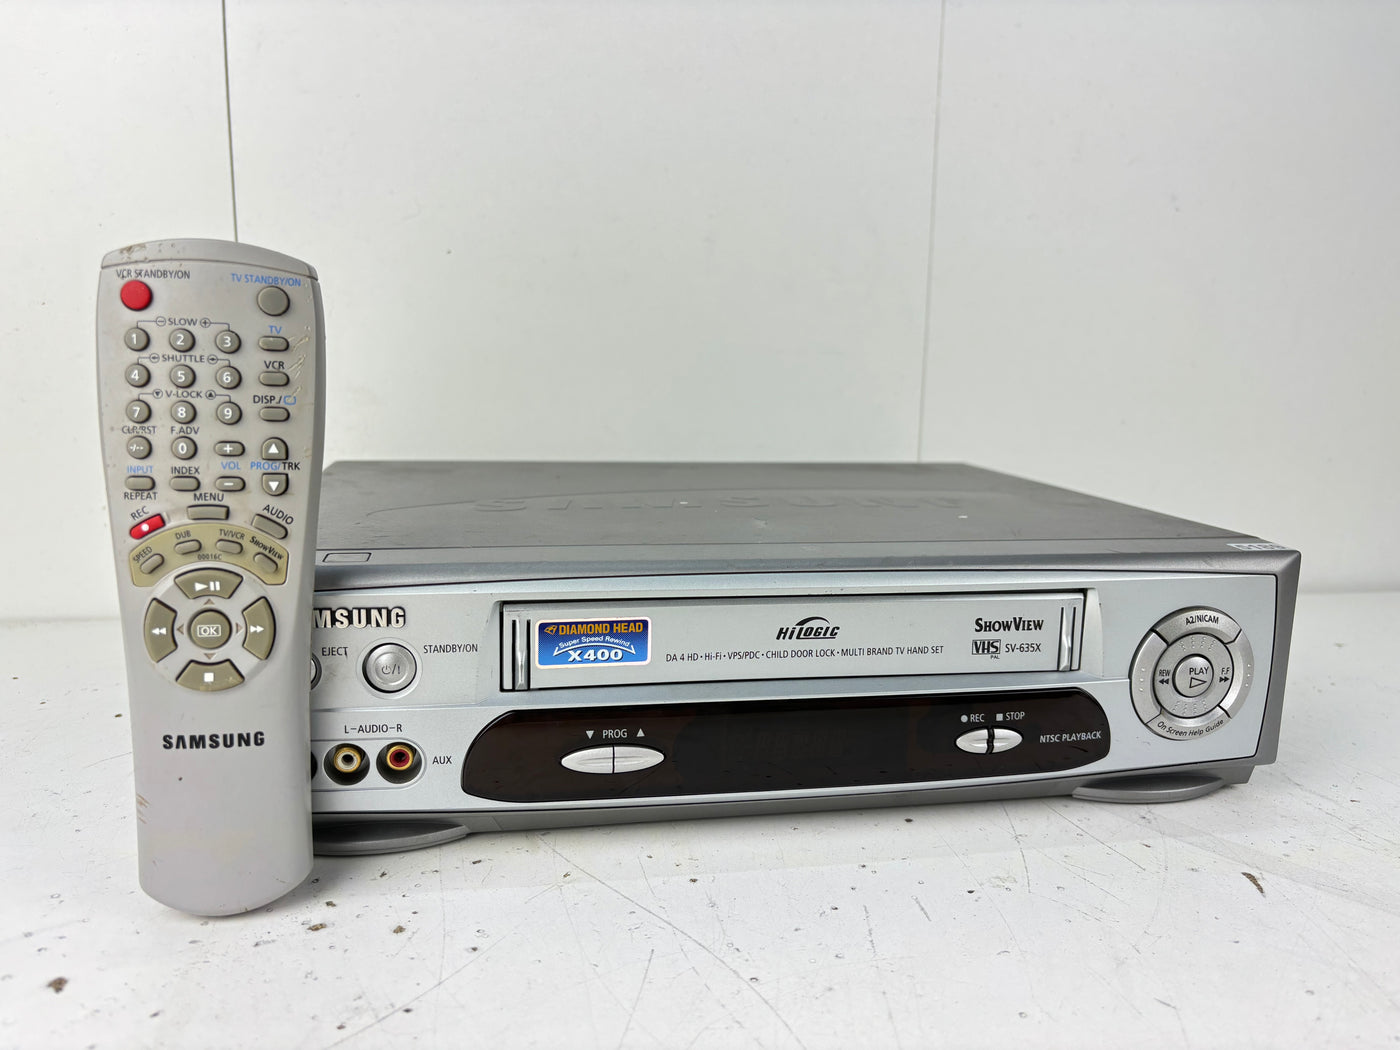 Samsung SV-635X VHS Videorecorder